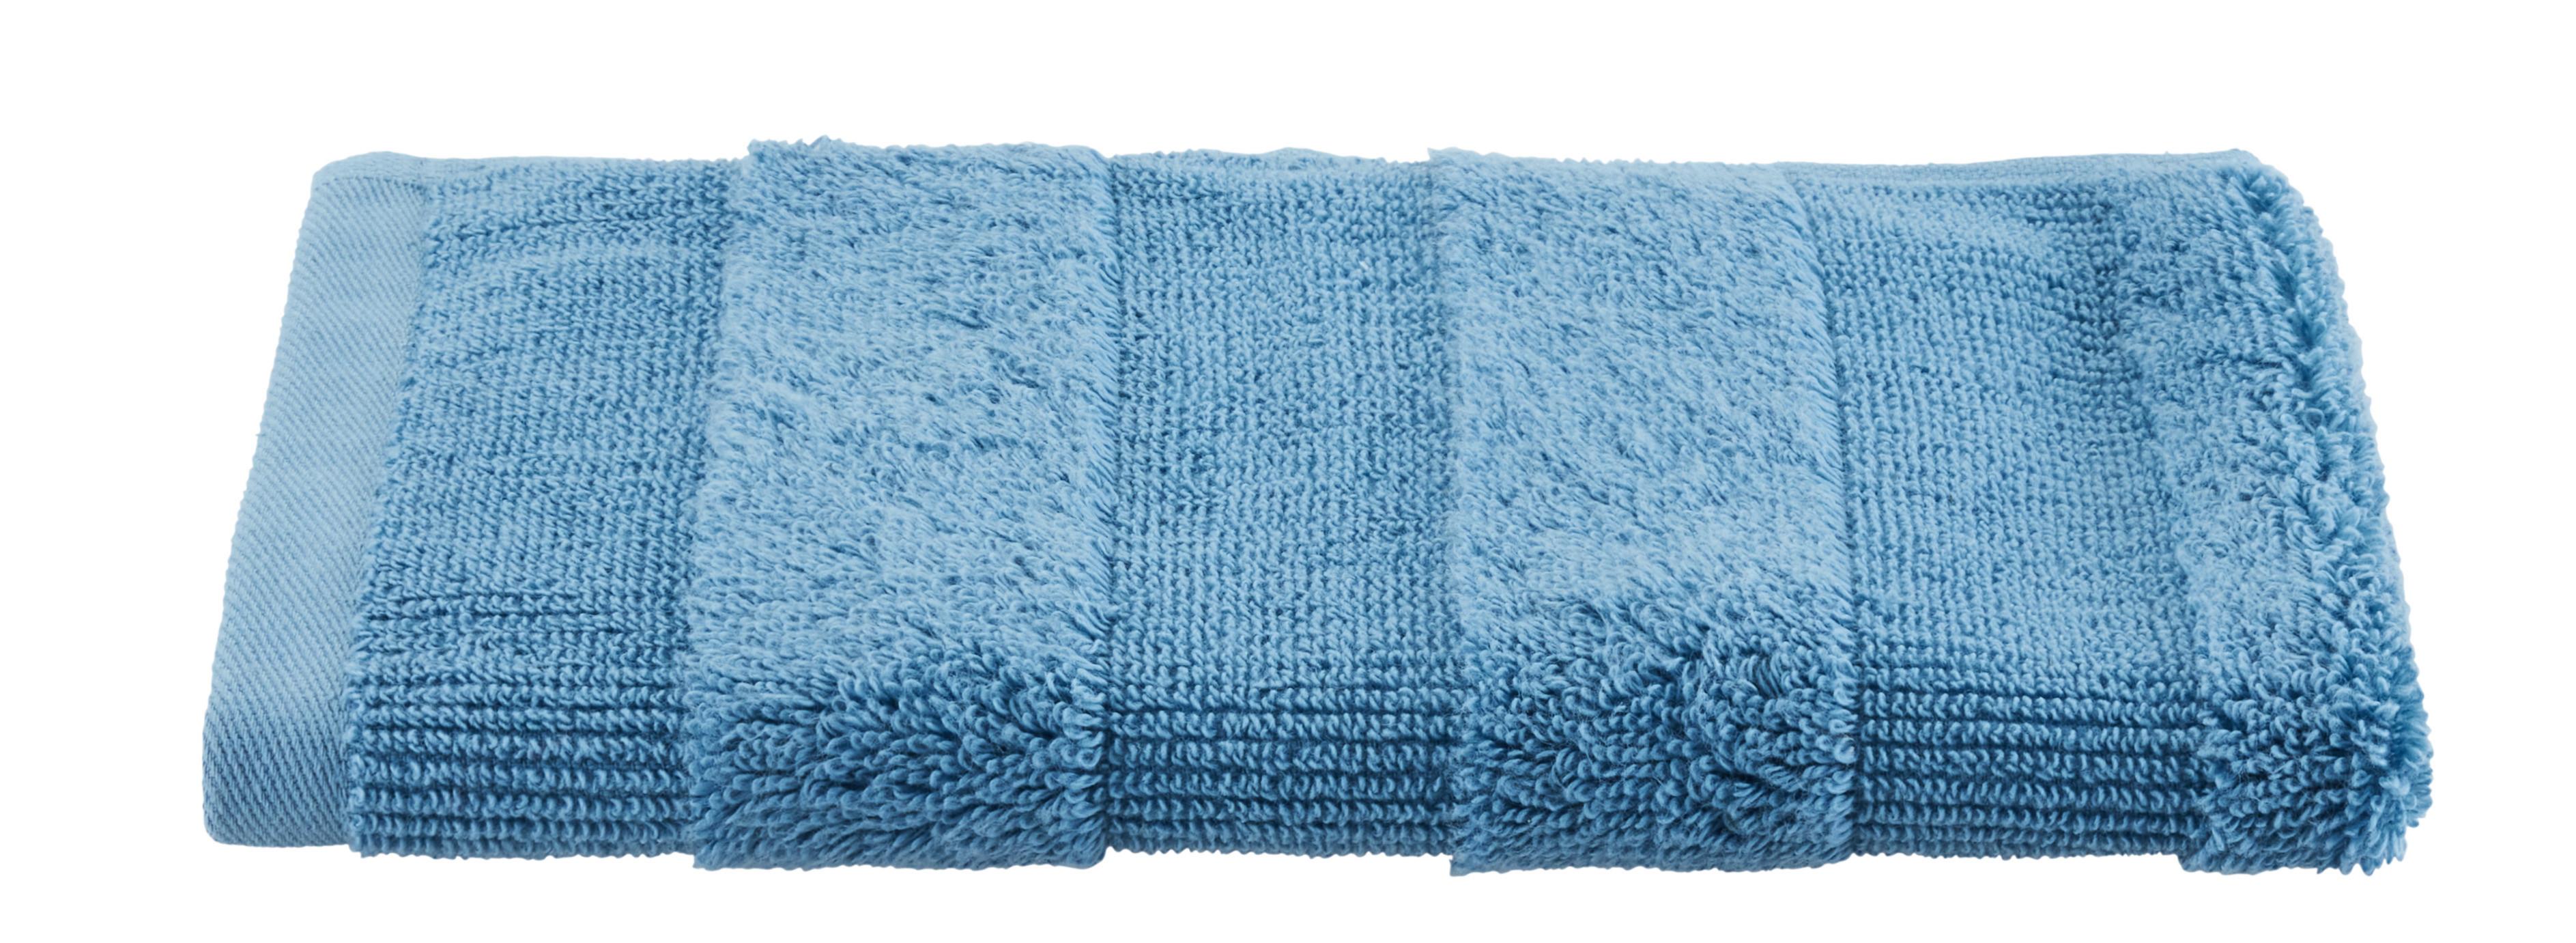 Brisača Chris - modra, tekstil (30/50cm) - Premium Living